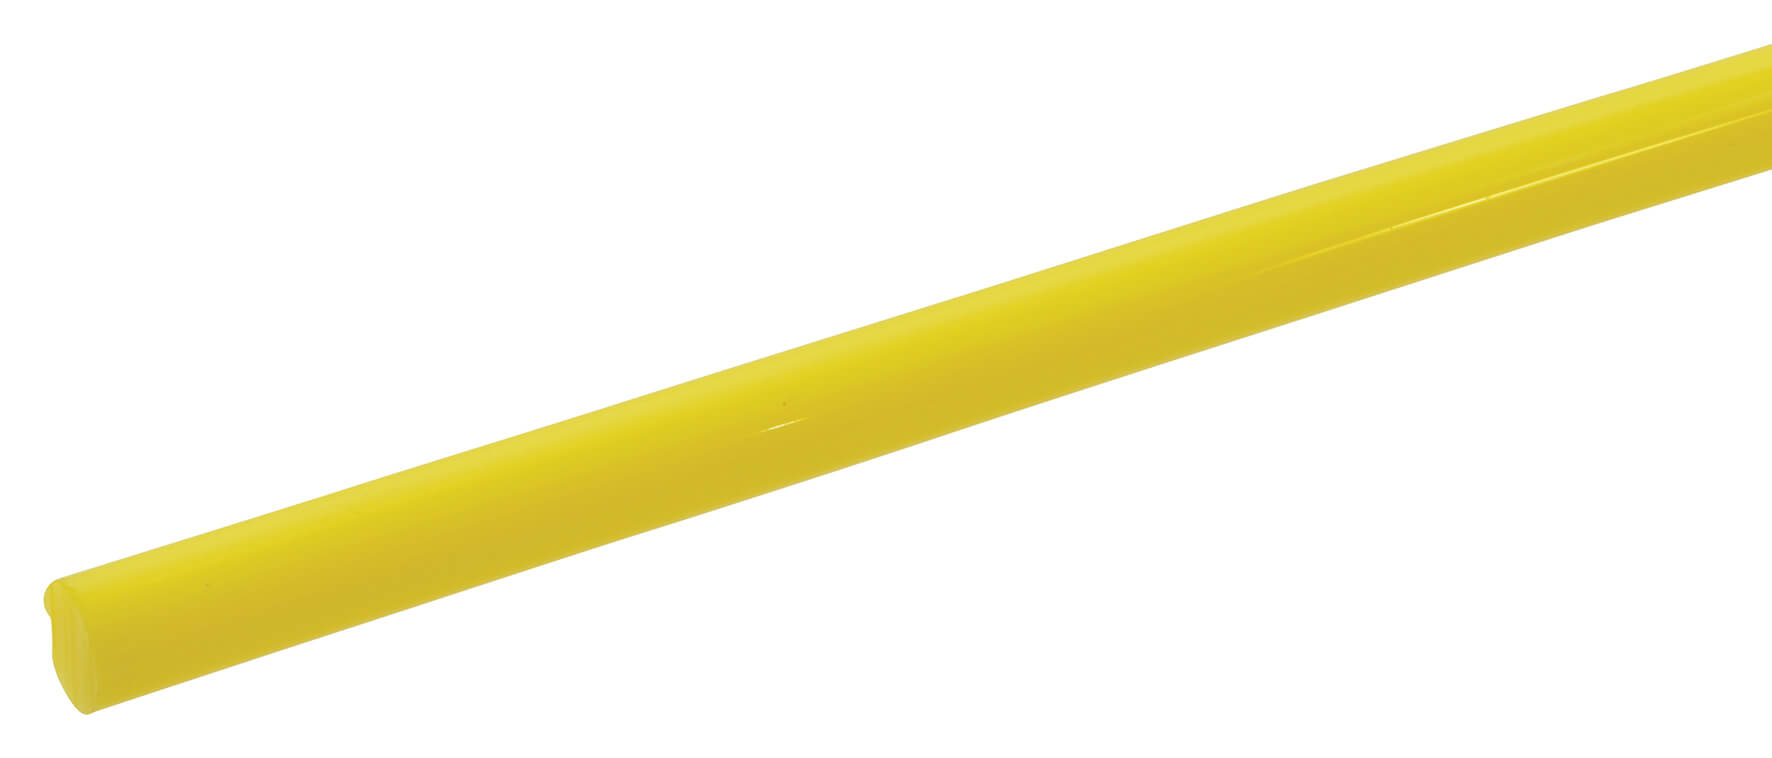 Acrylic Rod 4.8mm x 610mm  - Solid Yellow